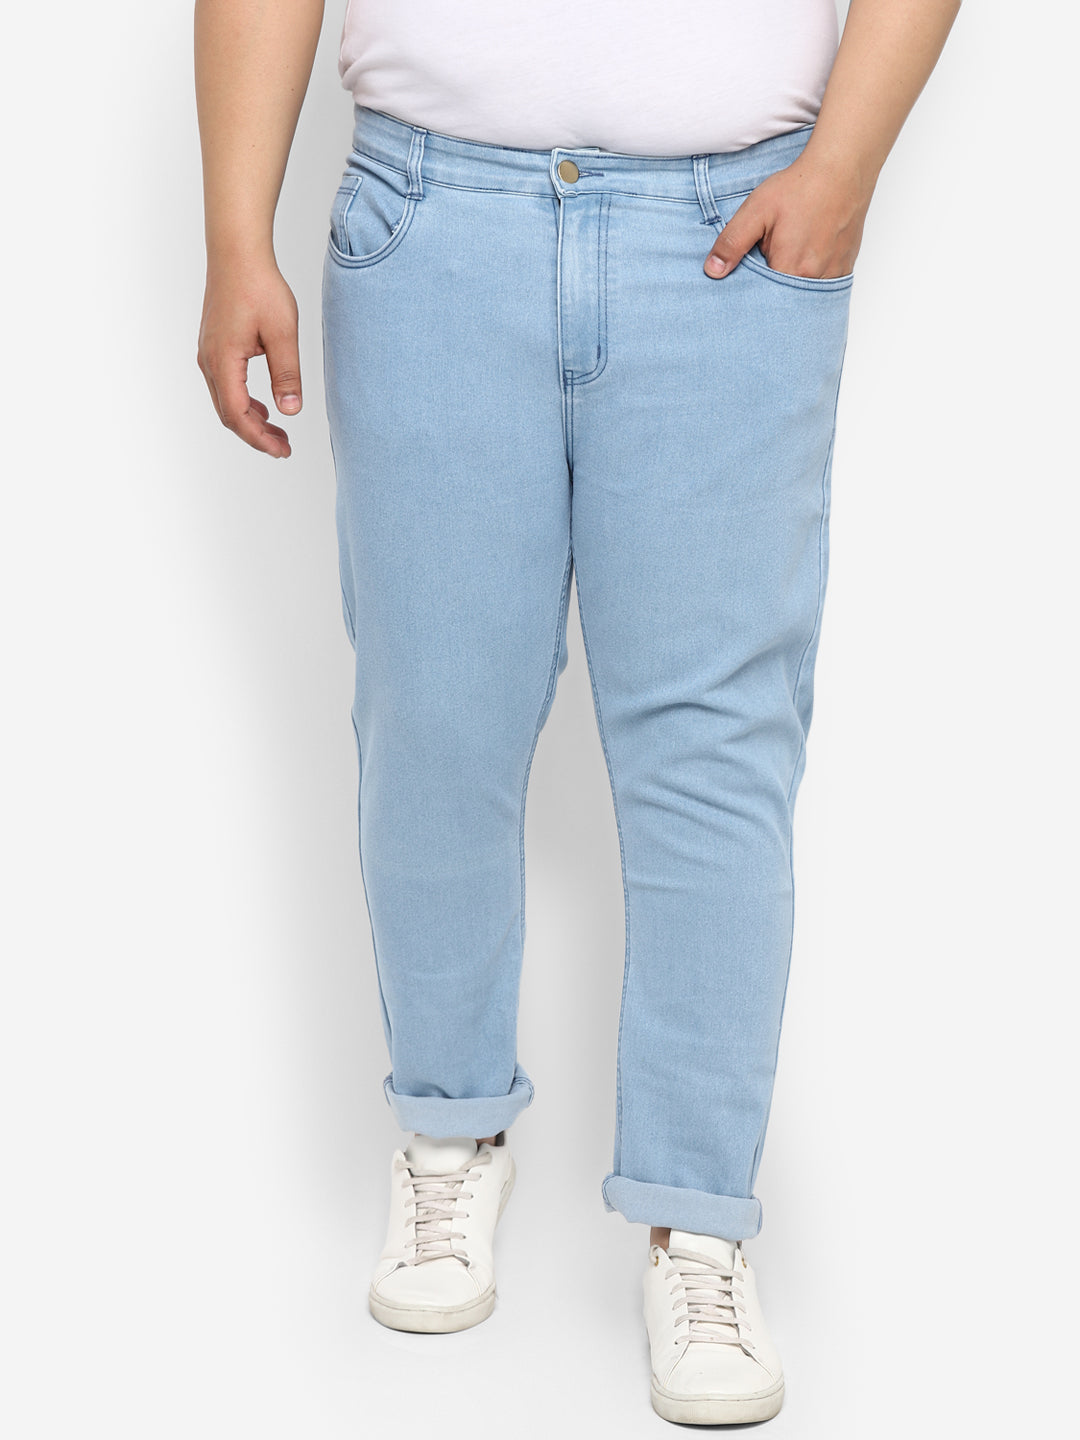 Plus Men's Ice Blue Regular Fit Solid Jeans Stretchable